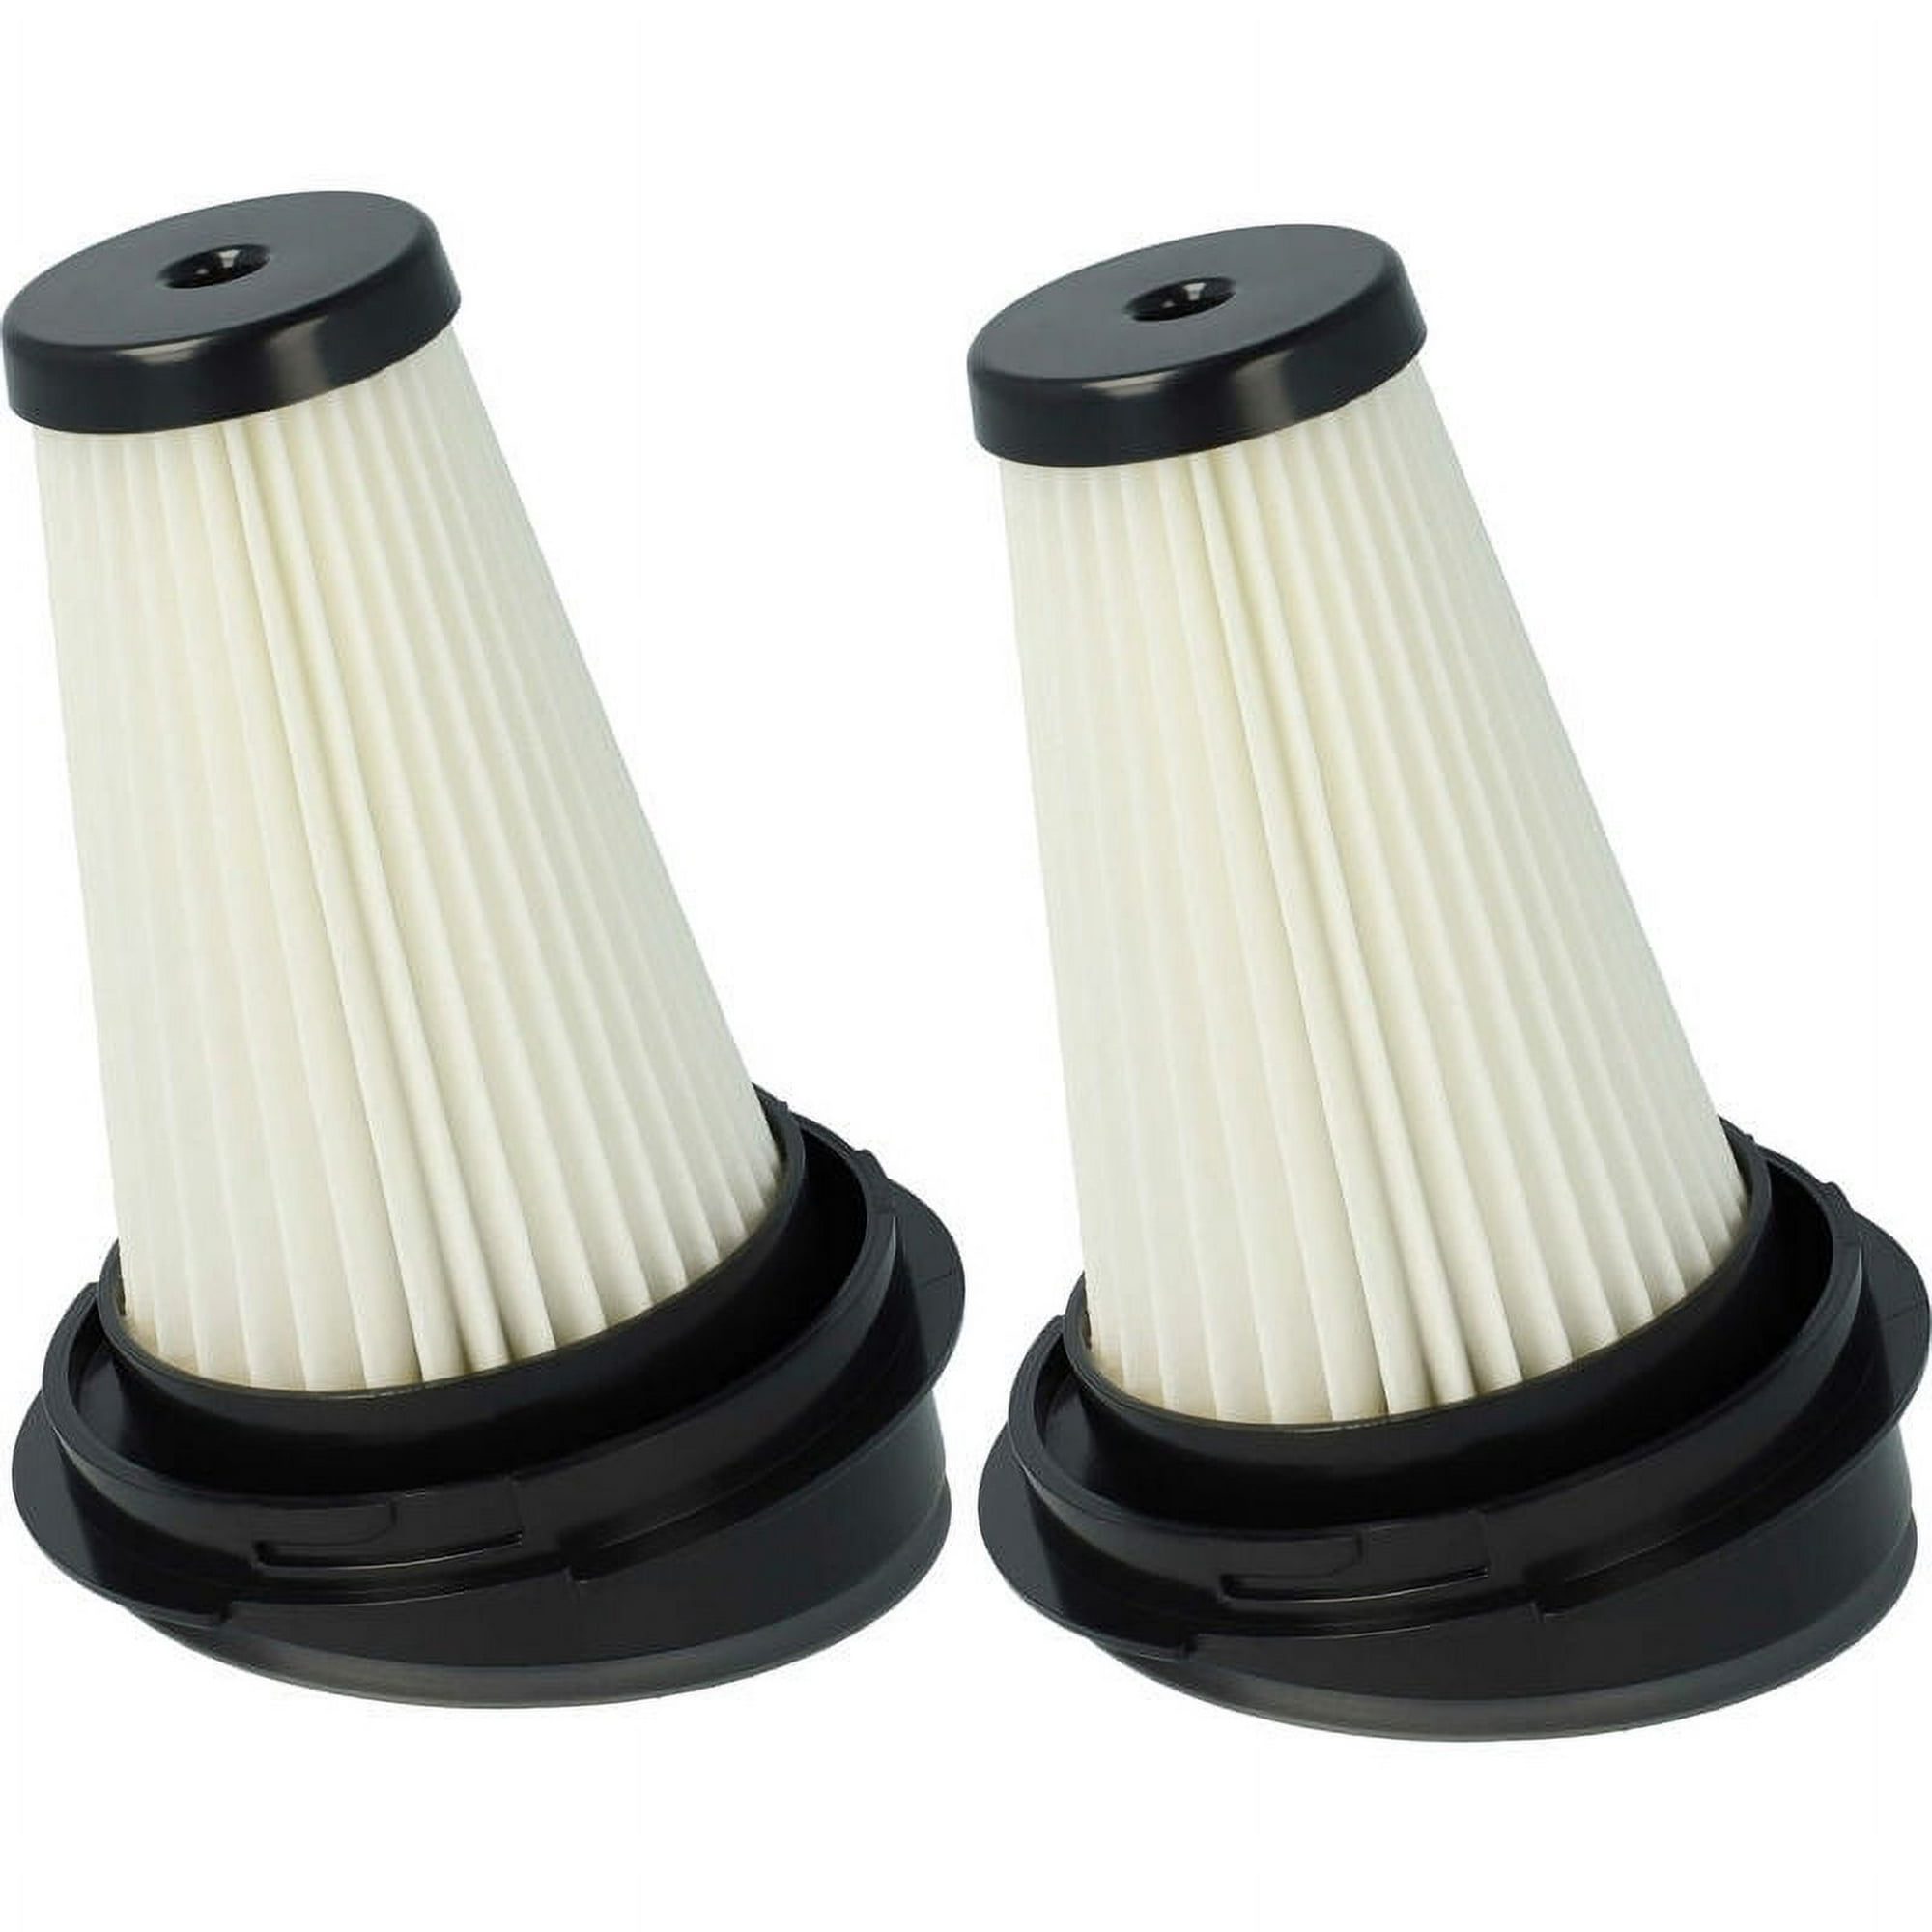 2x filtro compatible con aspiradora Rowenta X-Pert 3.60 RH6933WO, X-Pert  3.60 RH6935WO - Filtro HEPA contra alergias